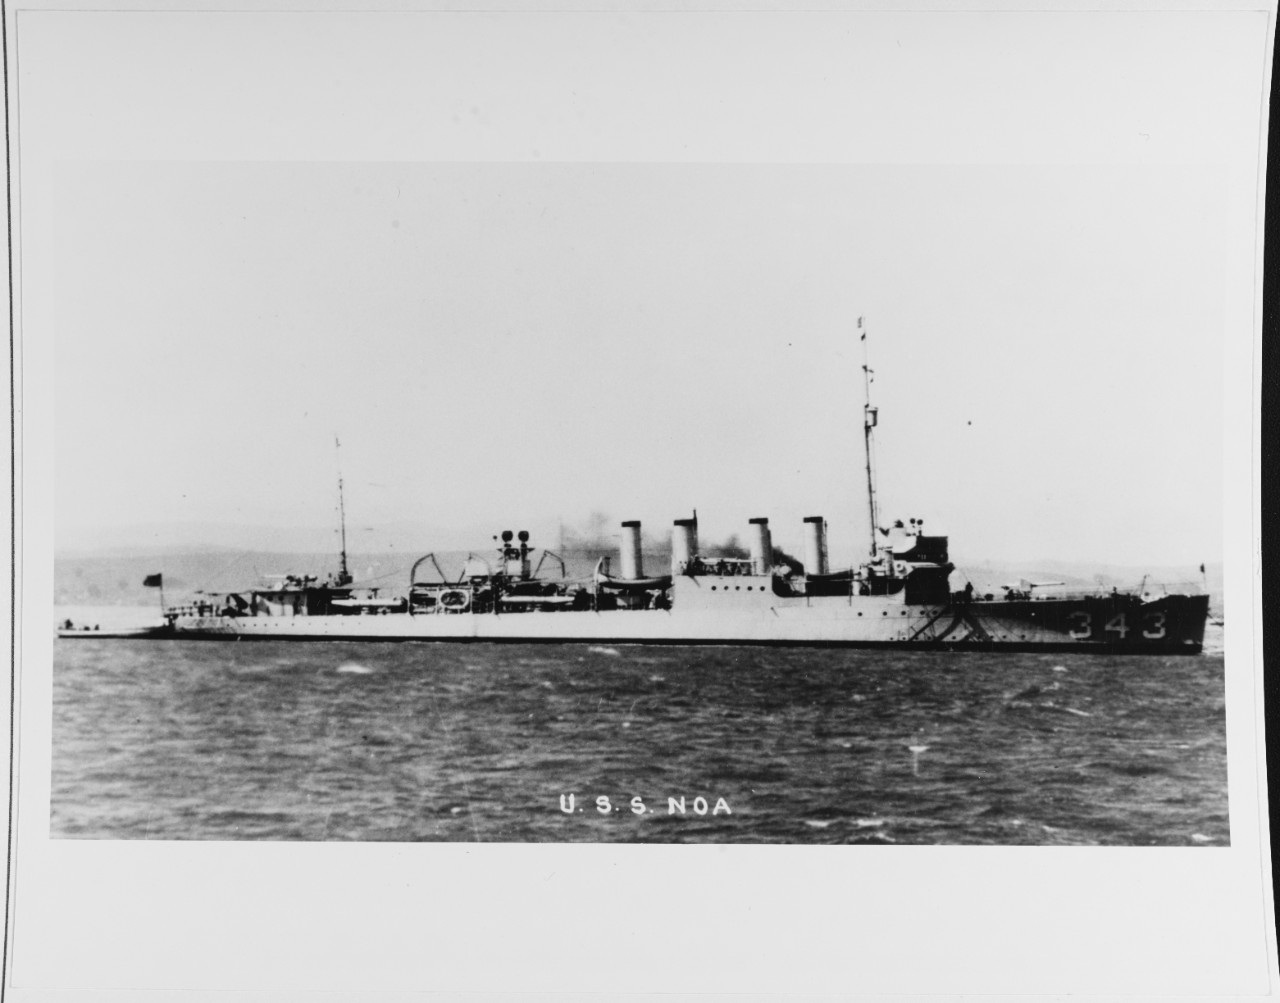 Starboard side view of Clemson-class destroyer USS Noa (DD-343)